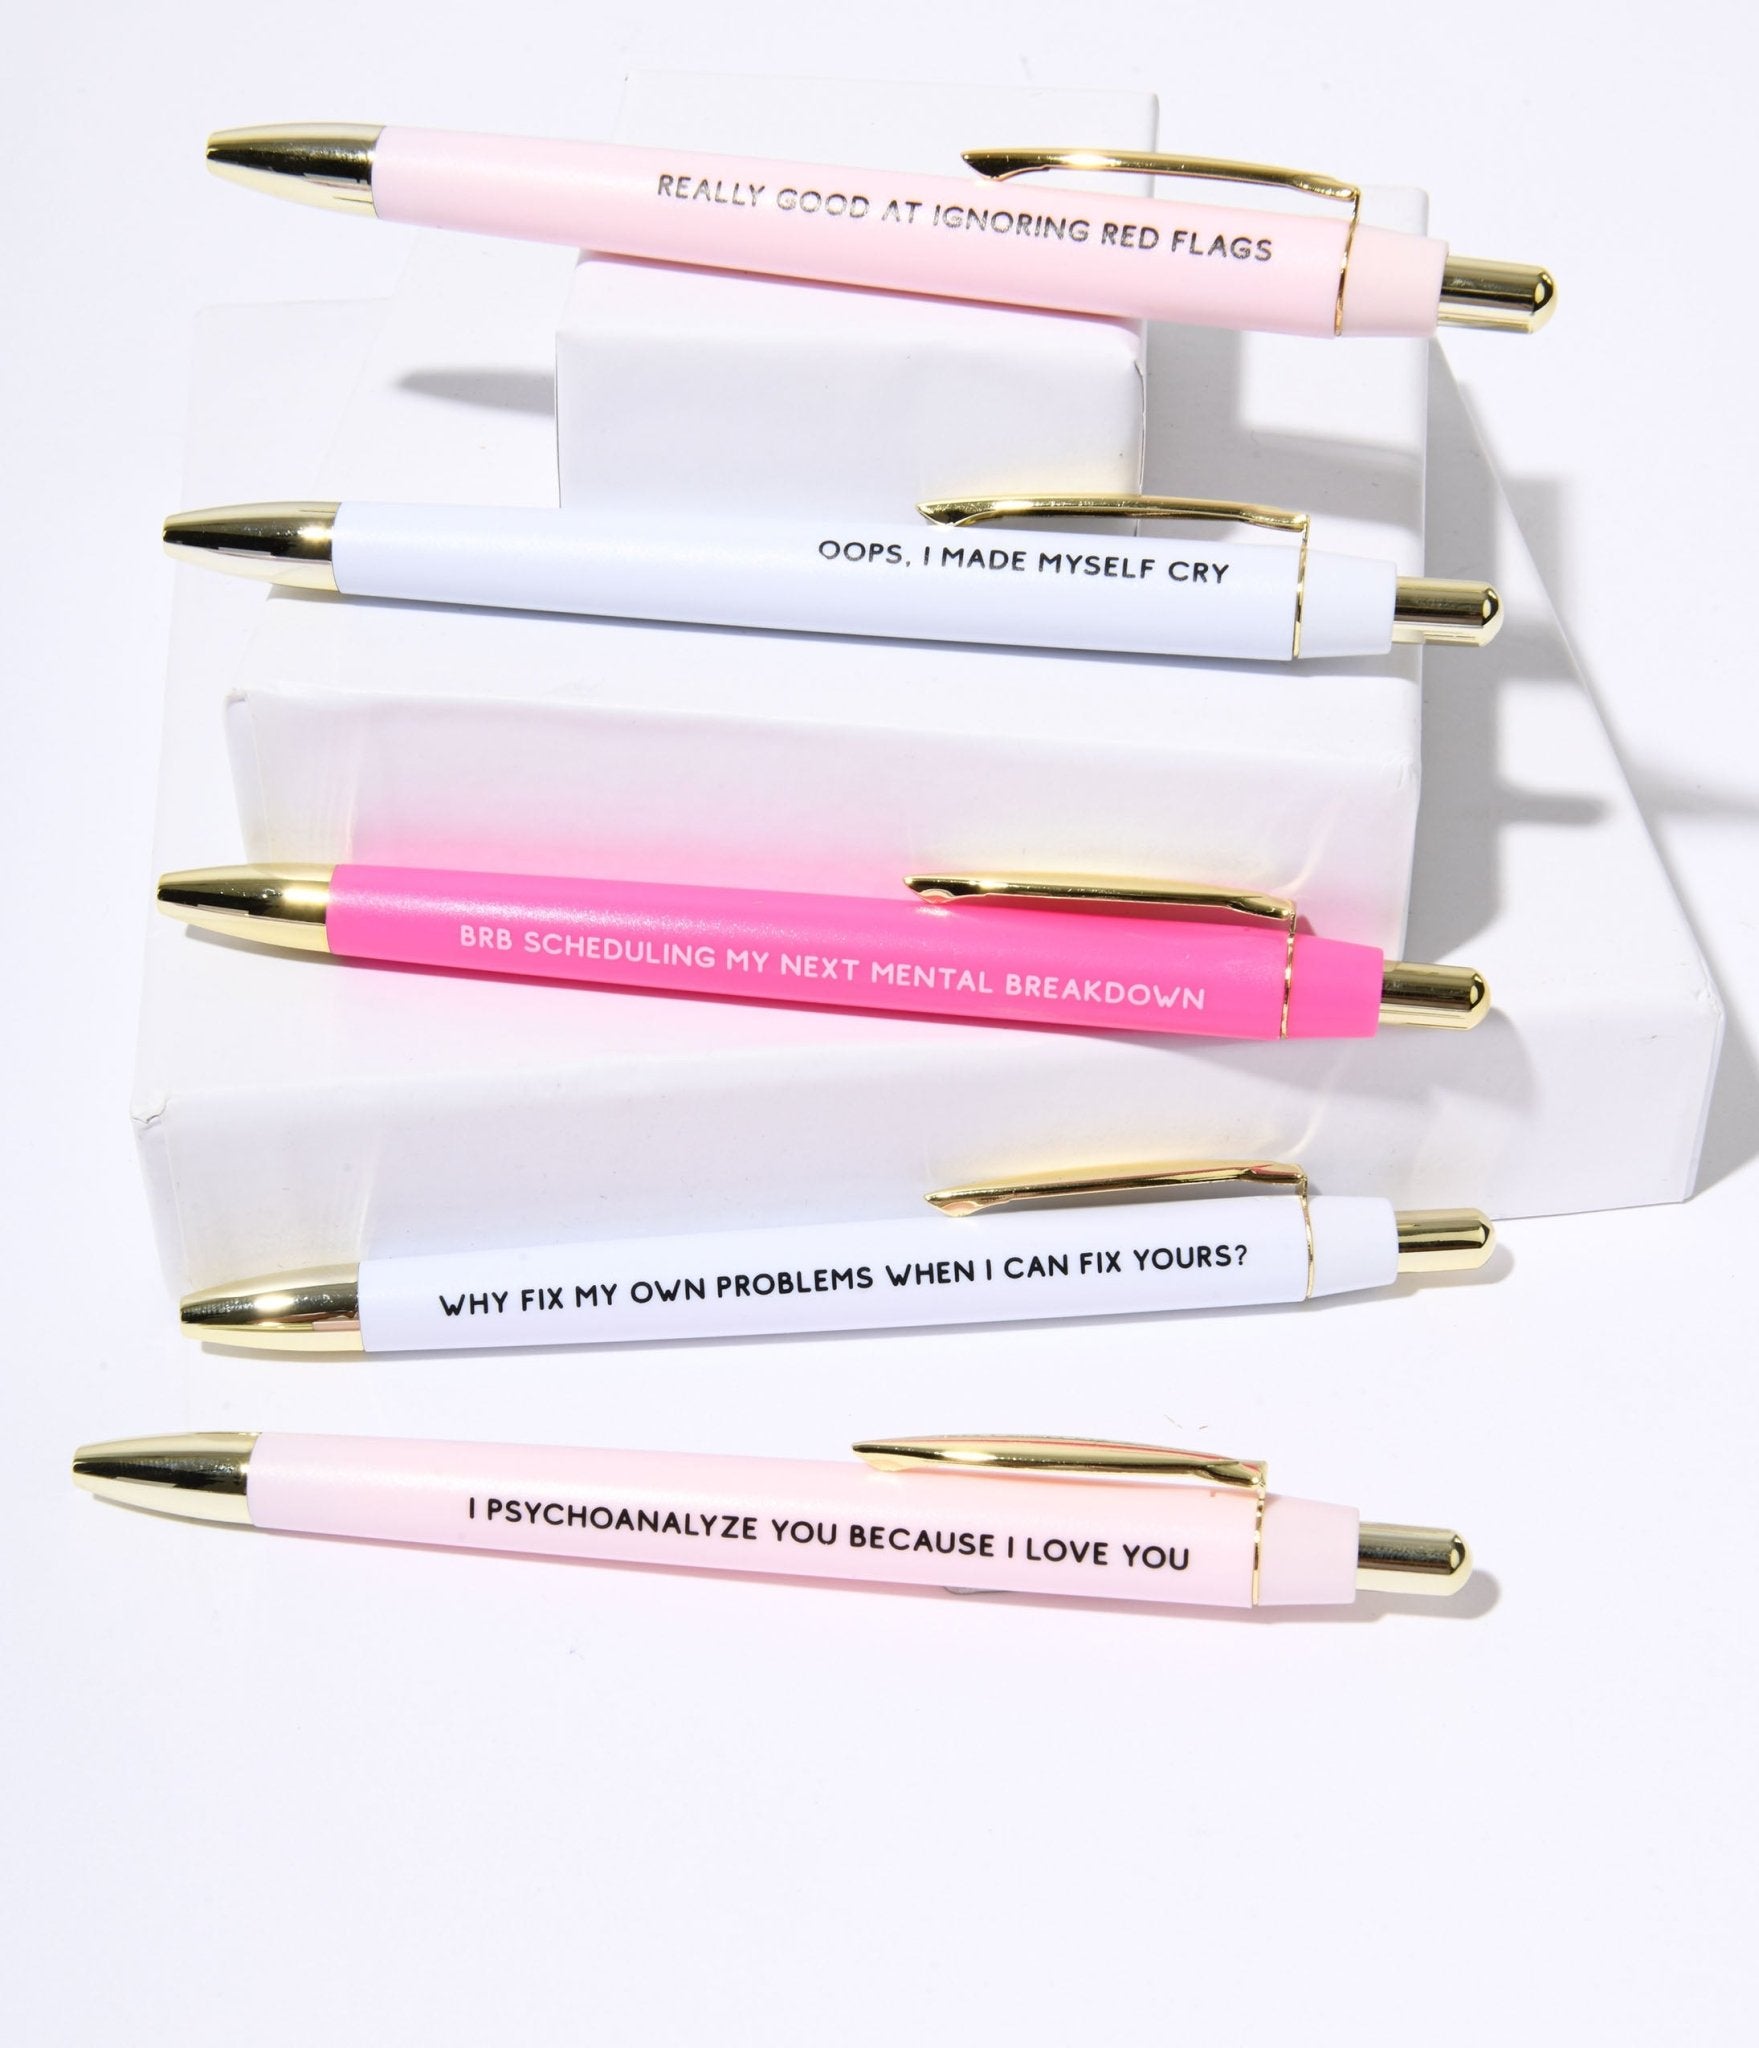 Cancer Pen Set - Unique Vintage - Womens, ACCESSORIES, GIFTS/HOME